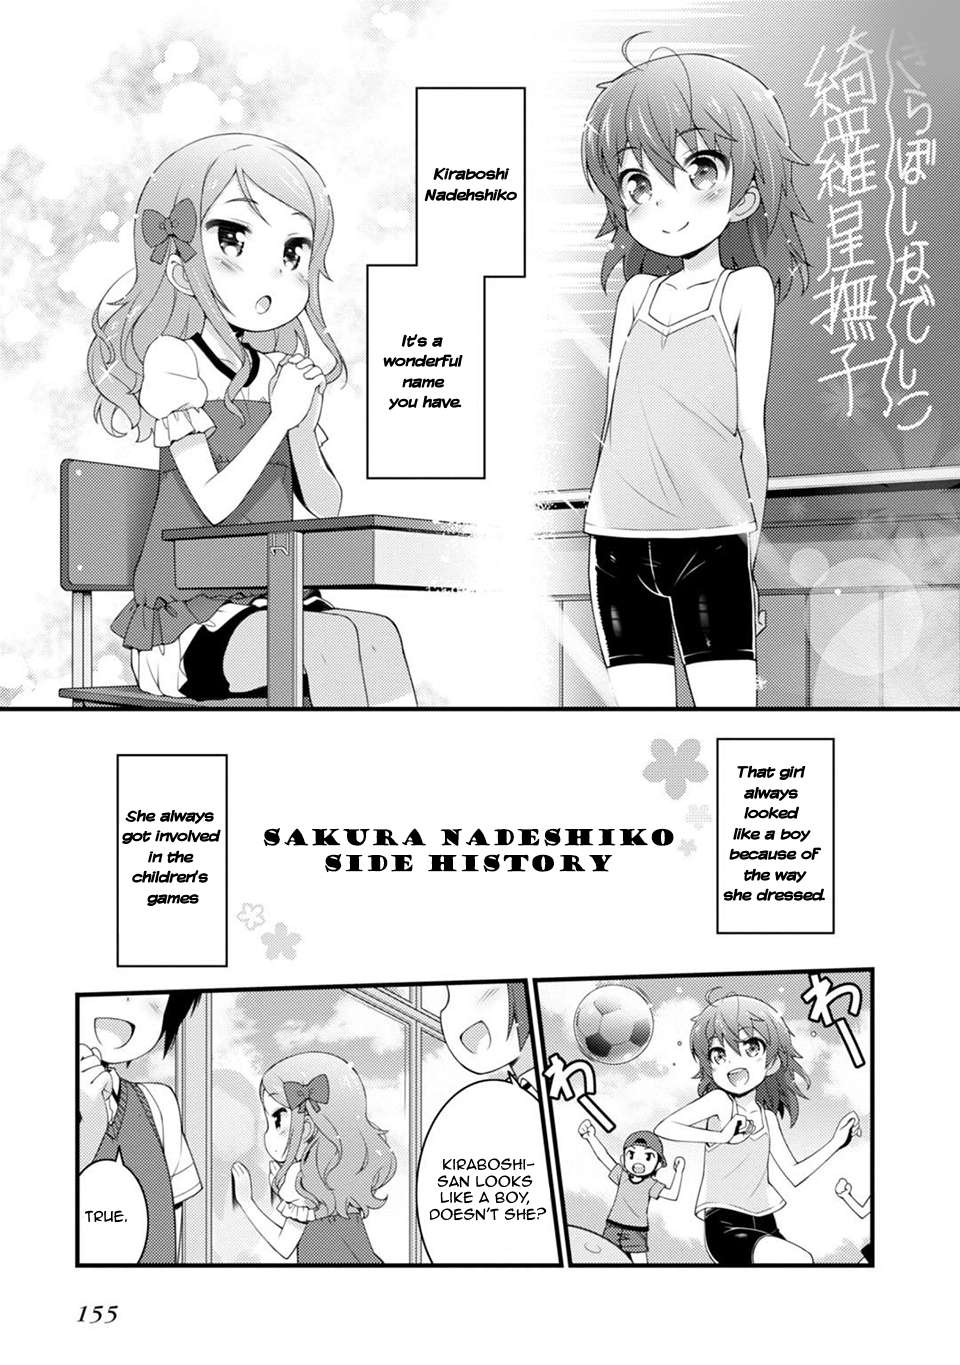 Sakura Nadeshiko - chapter 6.5 - #1